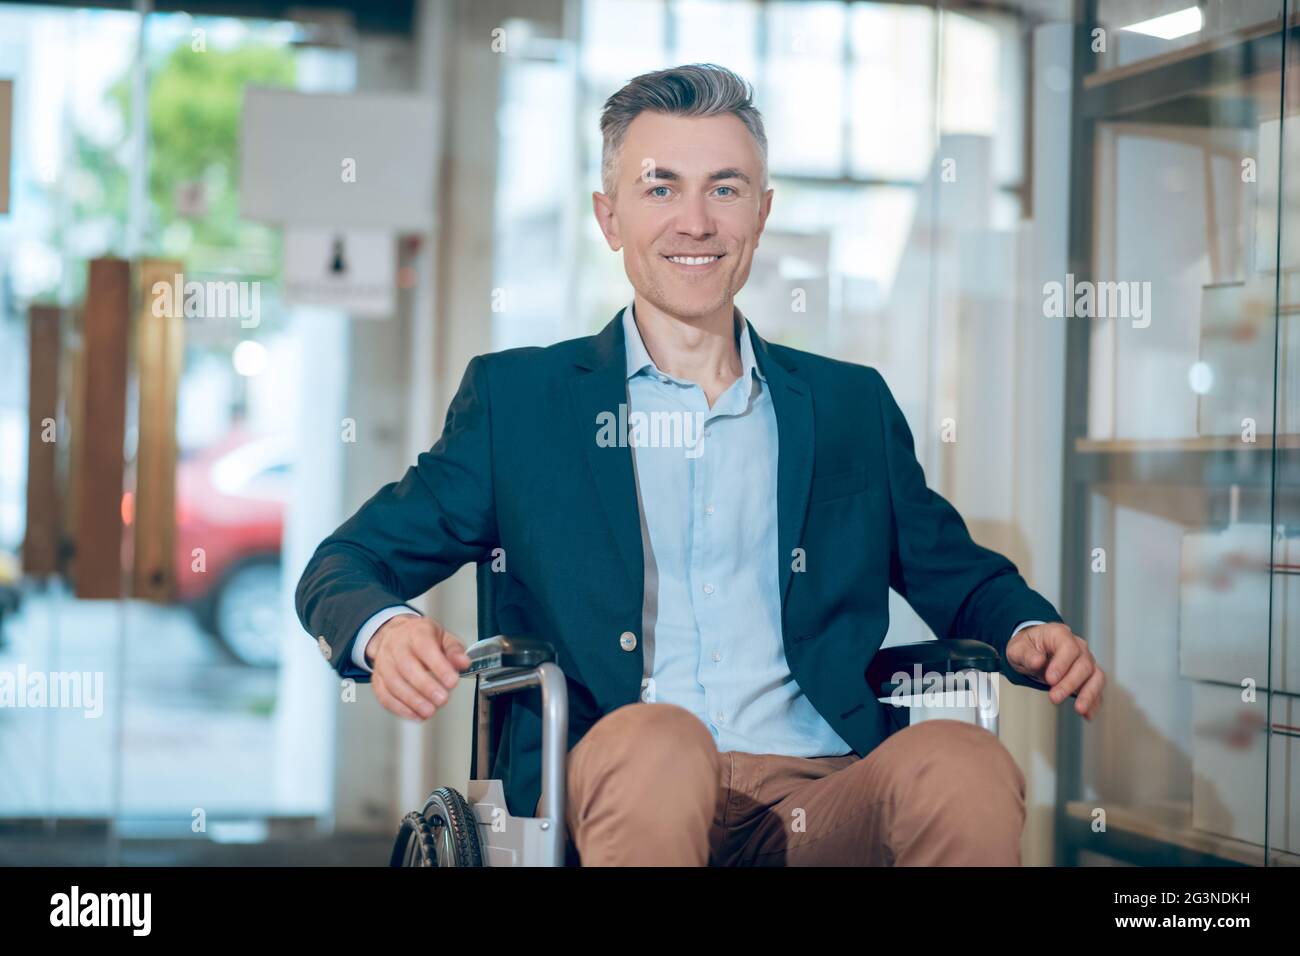 Happy smiling man on wheelchair indoors Stock Photo